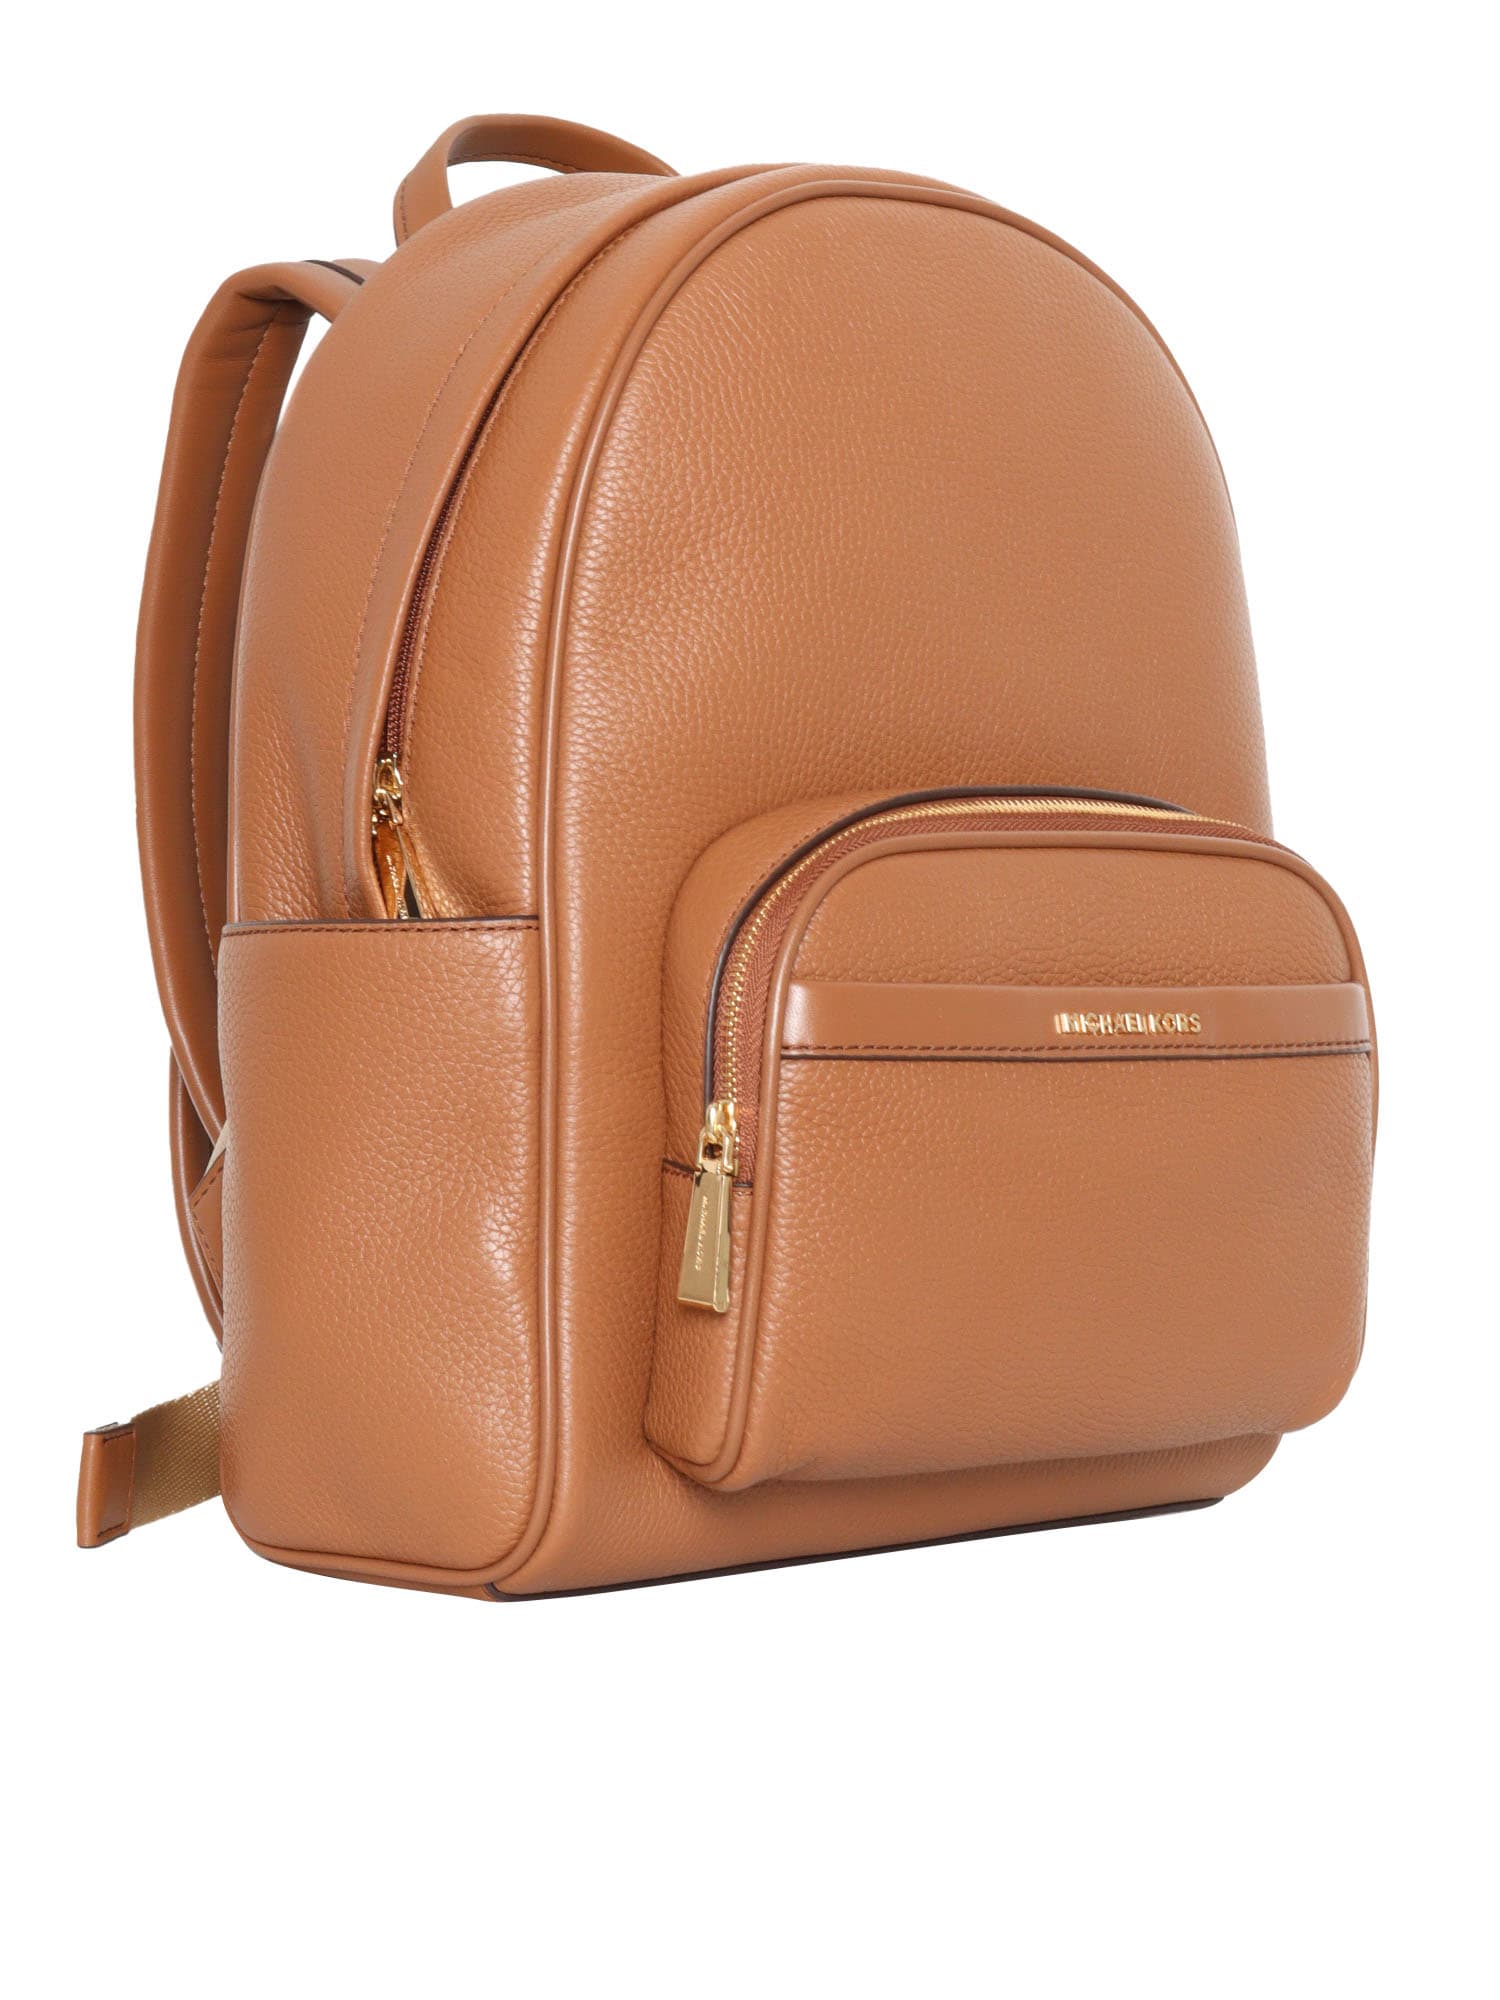 Shop Michael Kors Brown Leather Backpack